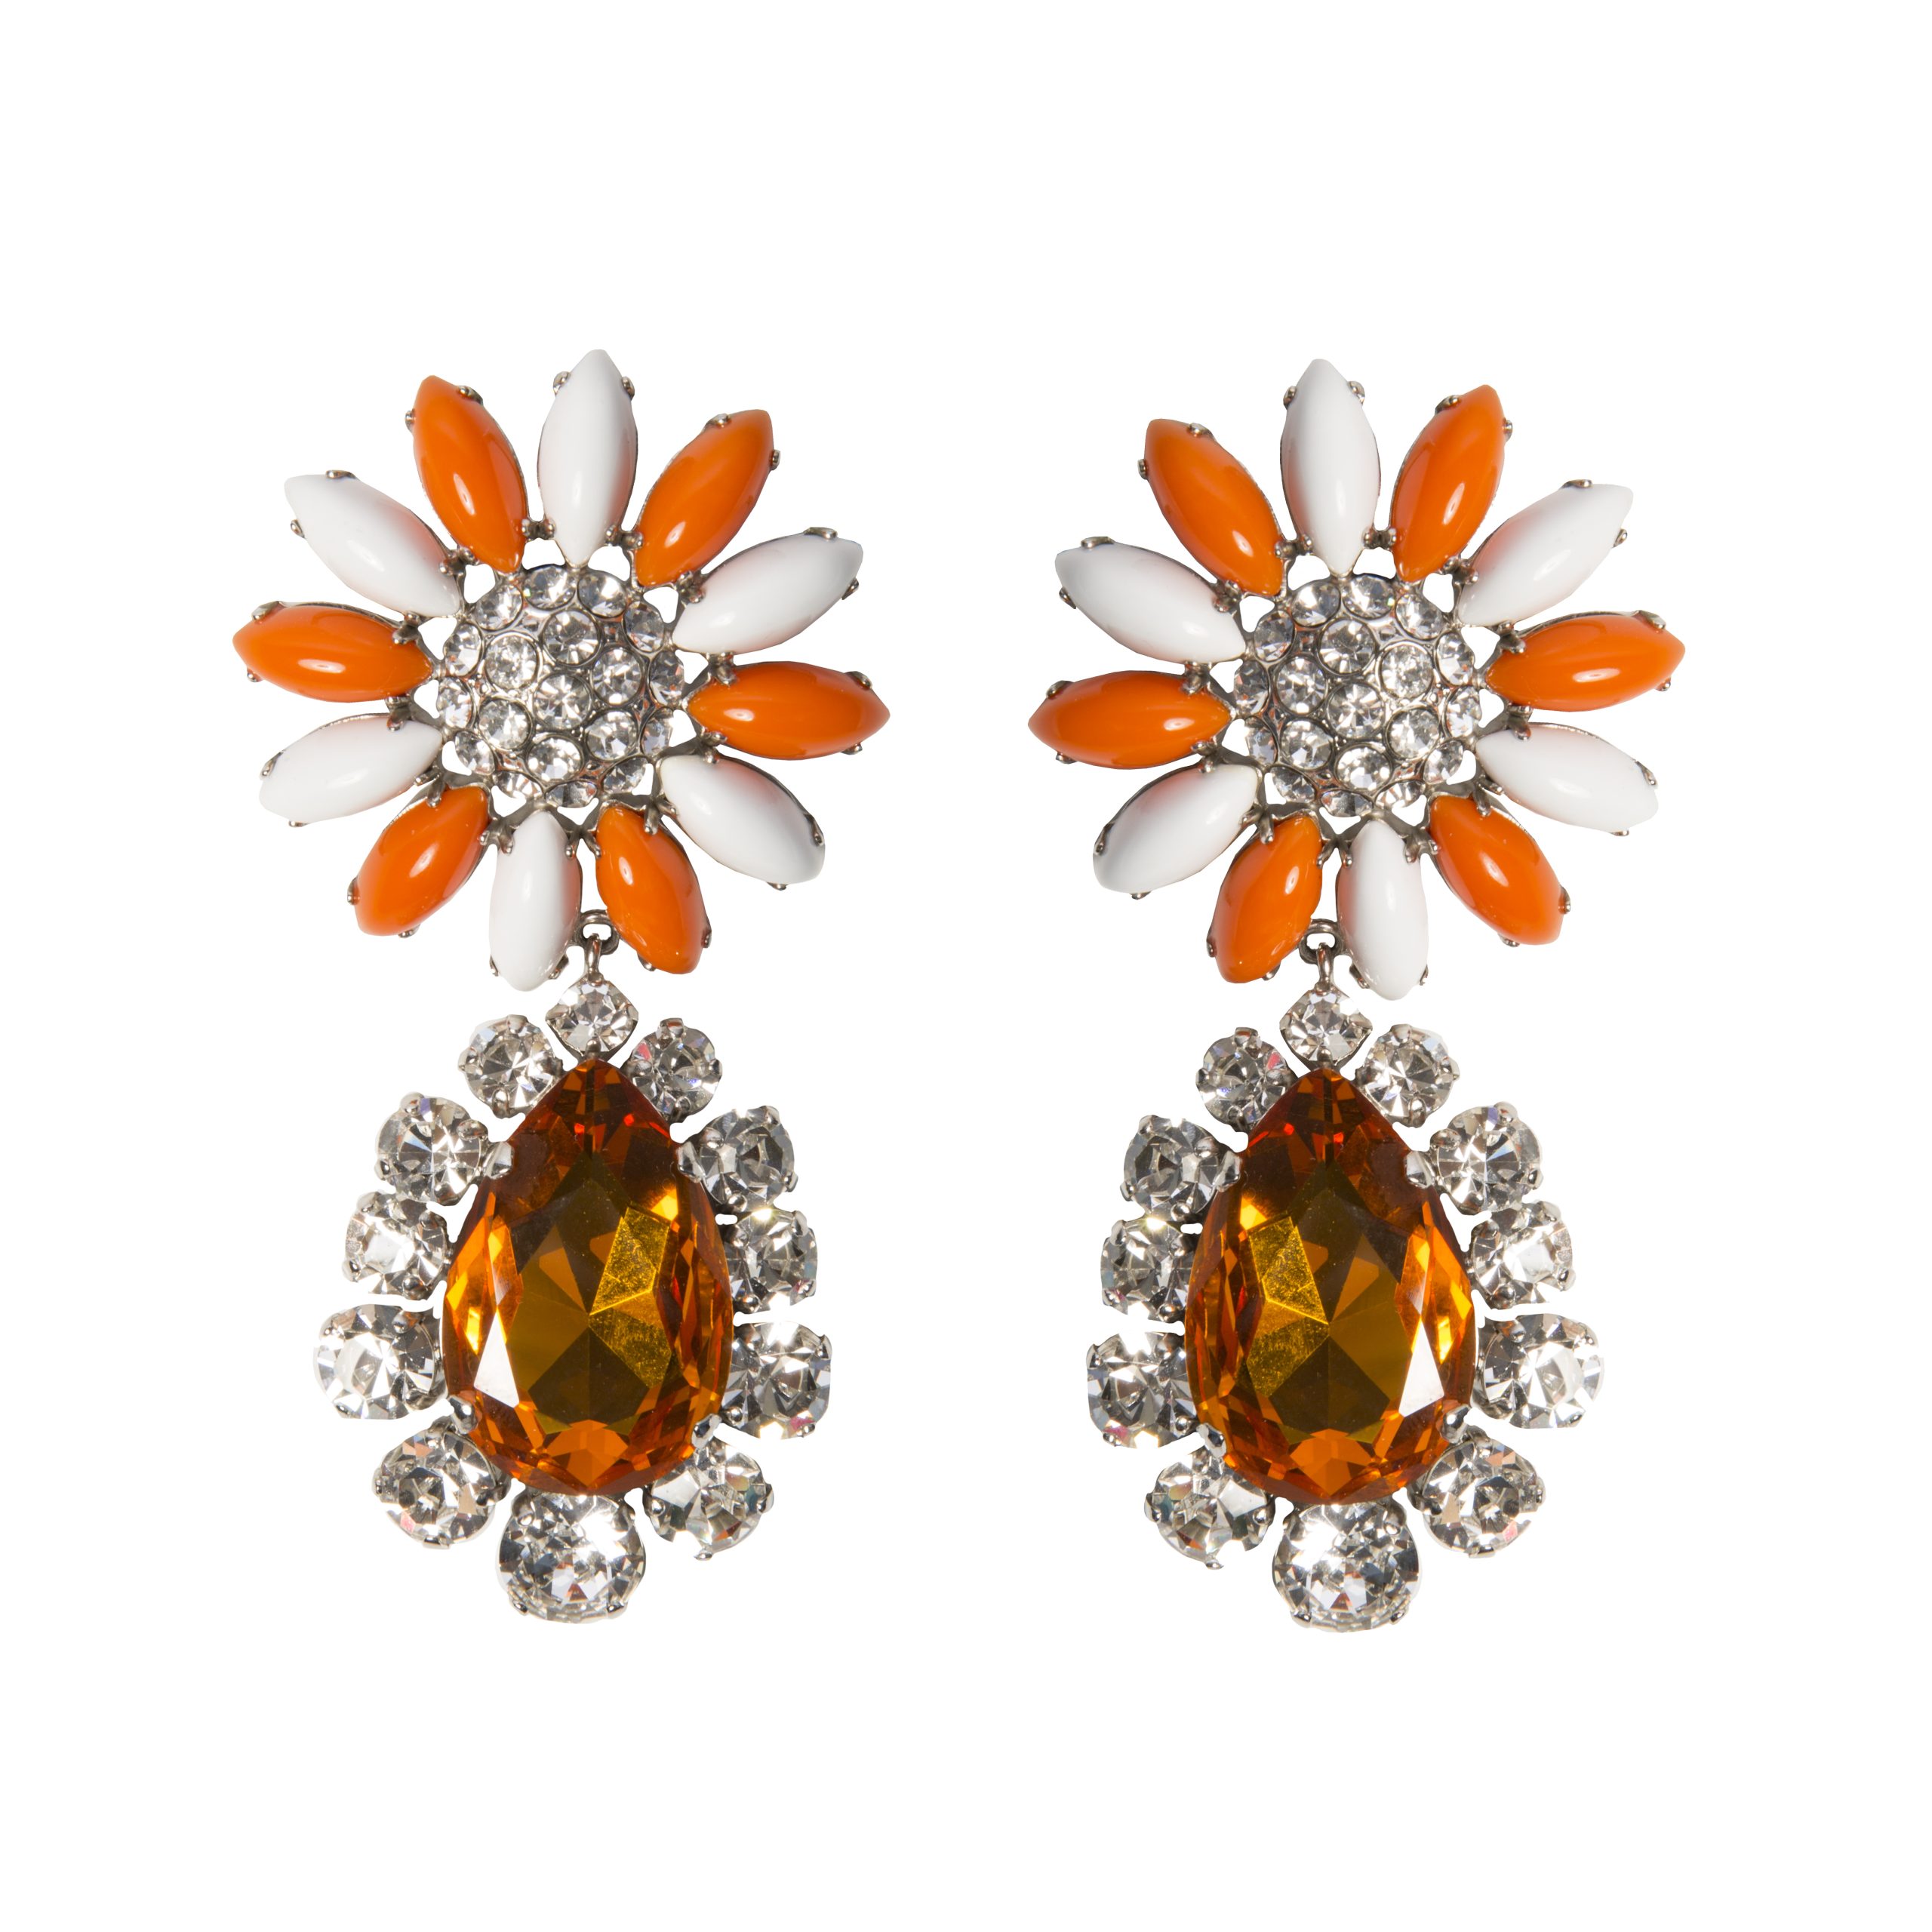 Orange and white daisy drop earrings